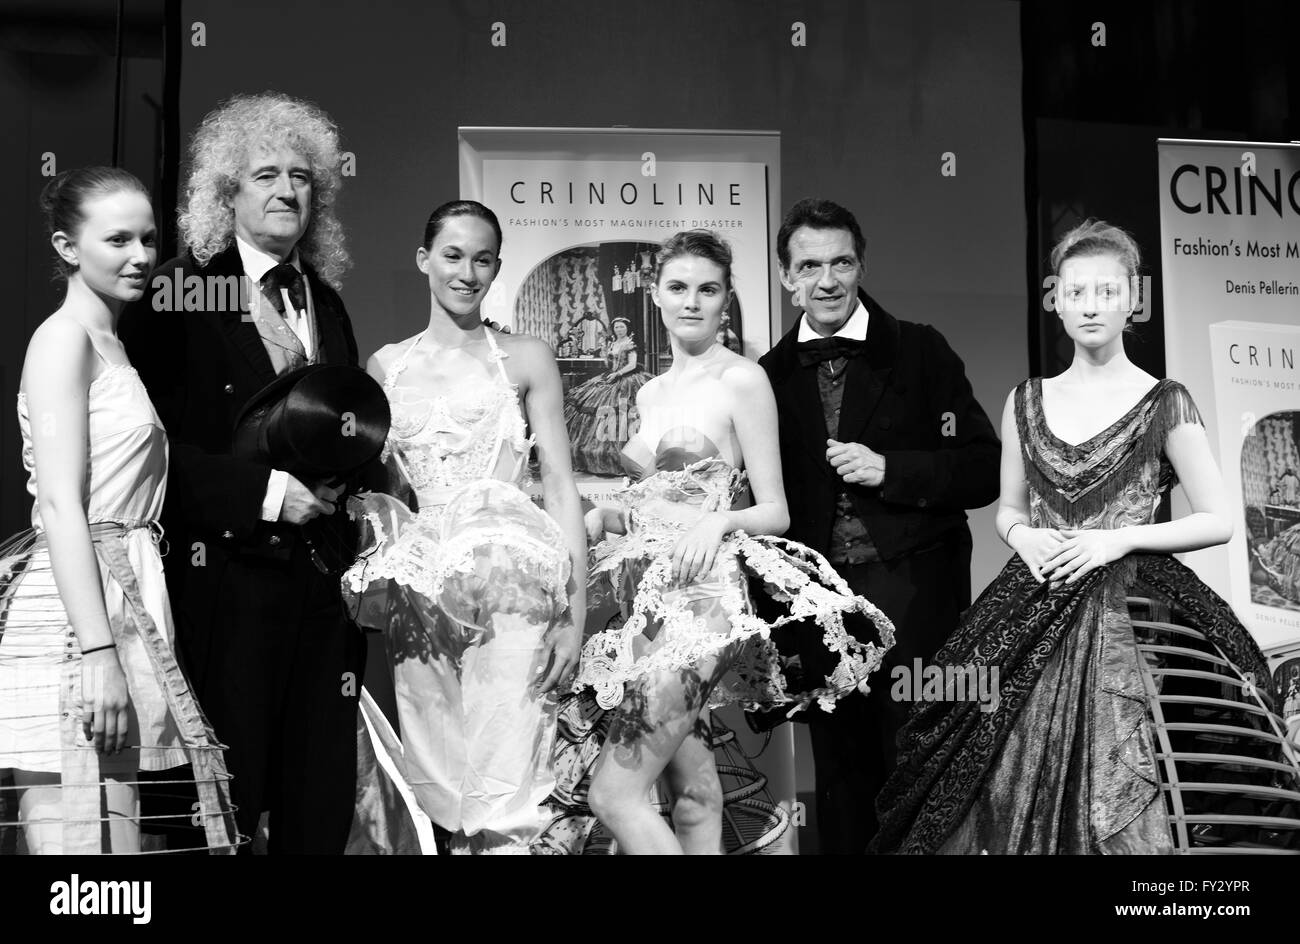 Brian May Denis Pellerin Bath in Fashion Book event Victorian dress Stock Photo